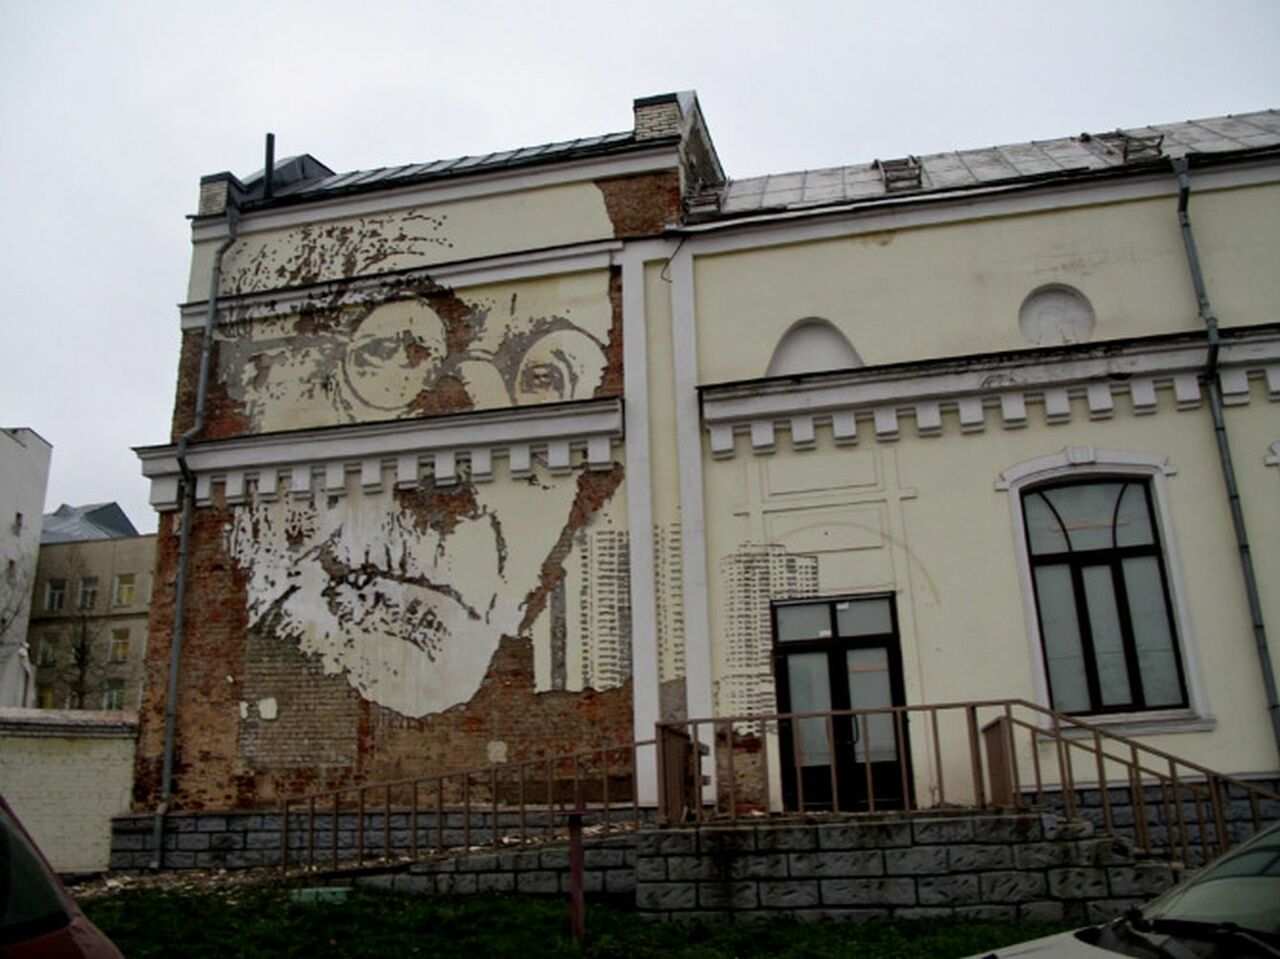 #StreetartSaturday #Streetart #AlexandreFarto created this installation in Moscow. https://t.co/S3jyQYAkY1